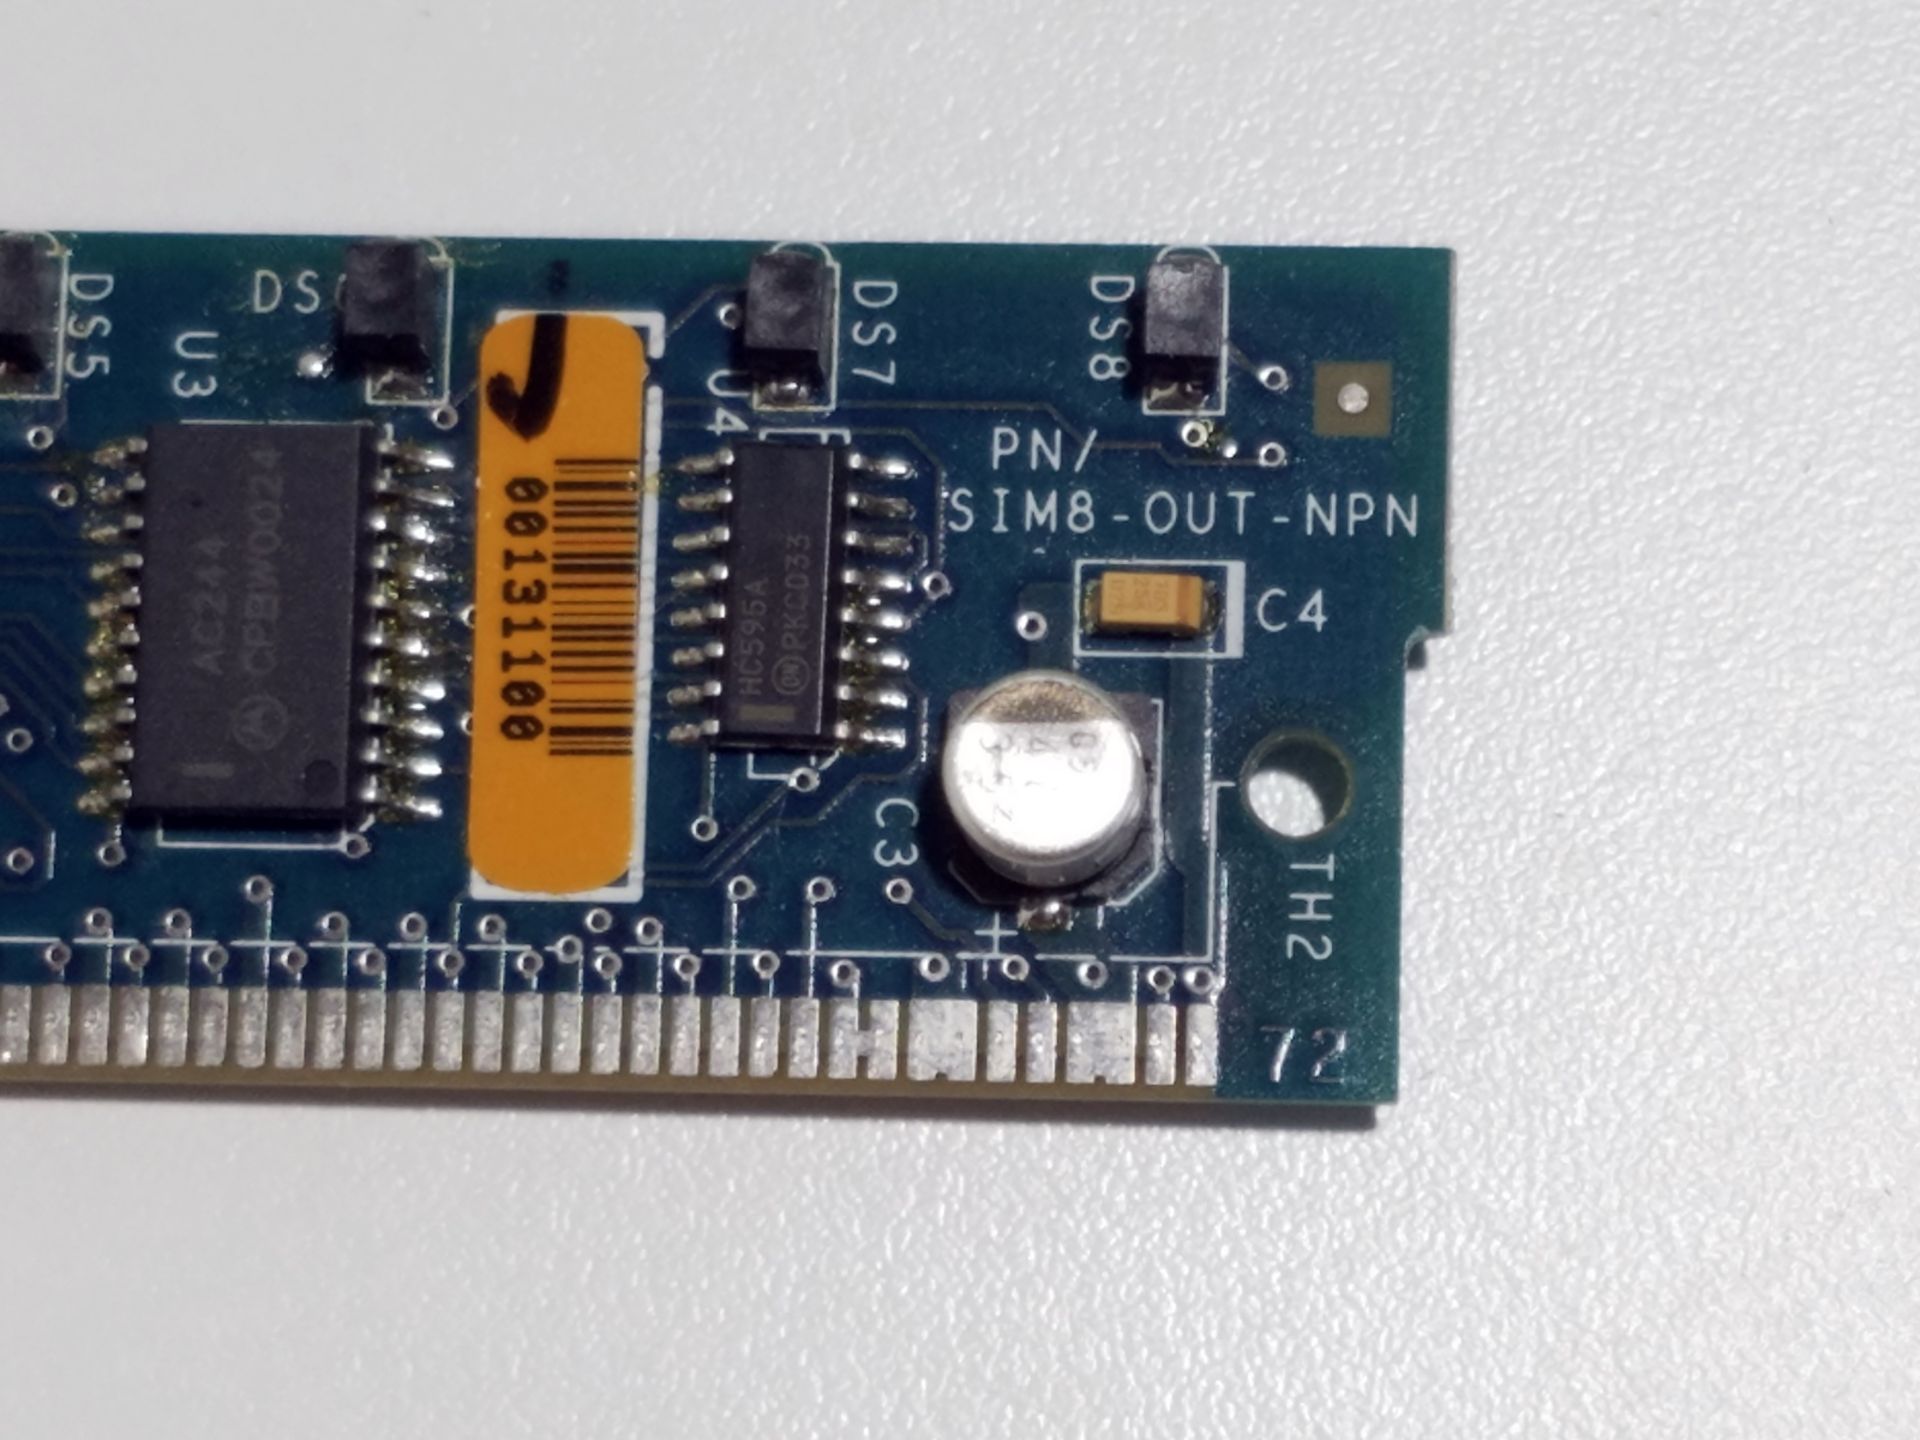 Parker Compumotor SIM Cards, SIM8-IN, SIM8-OUT-NPN - Image 3 of 7